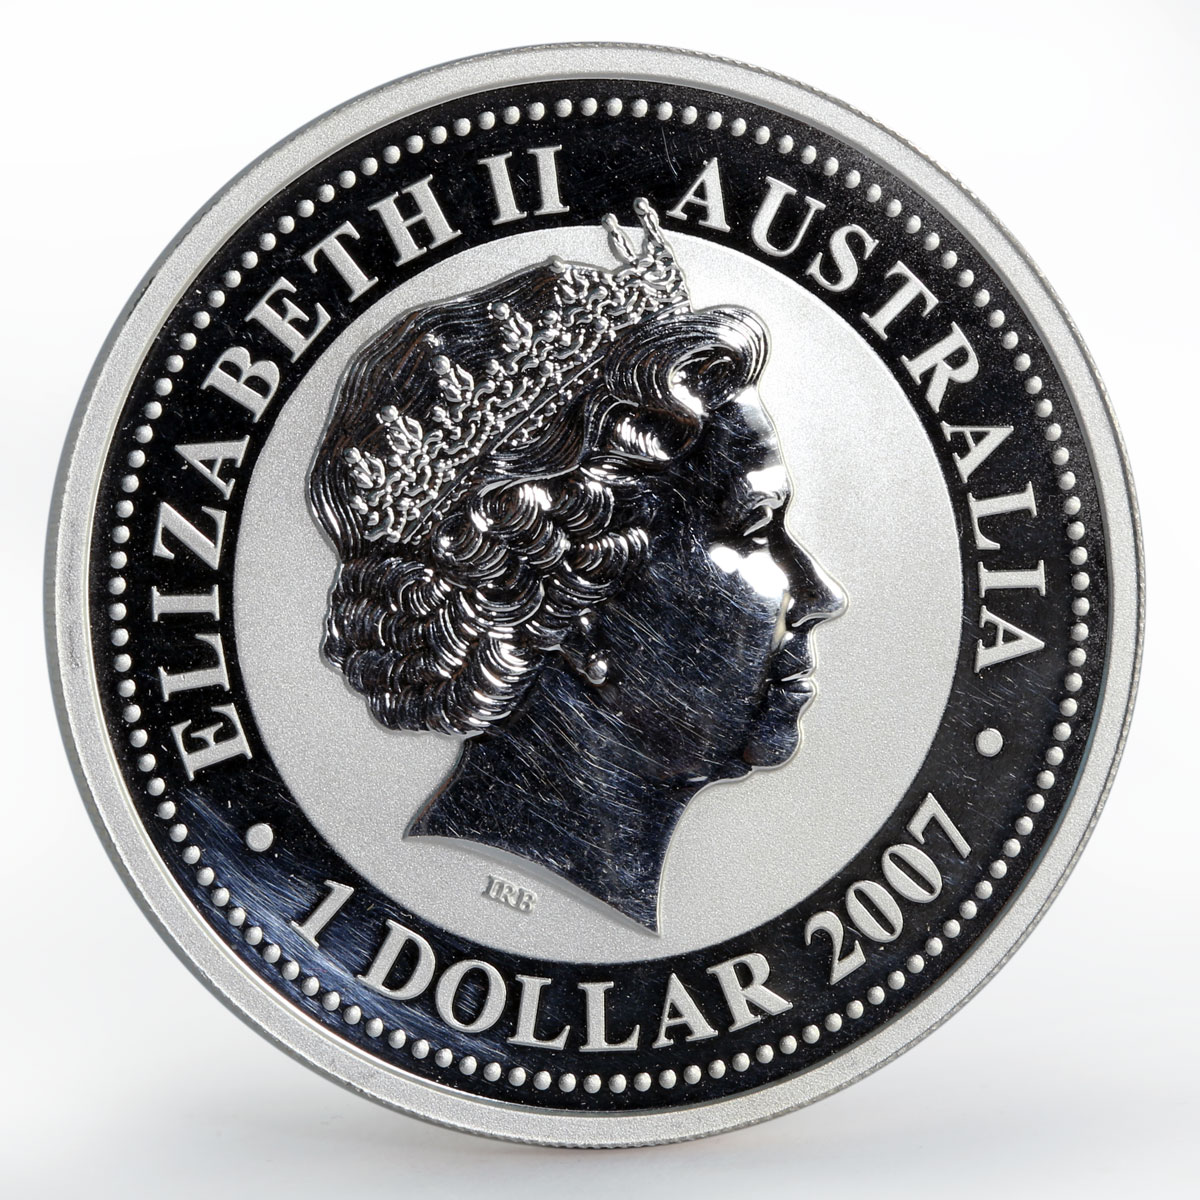 Australia 1 dollar Lunar Year of the Ox gilded silver coin 2007